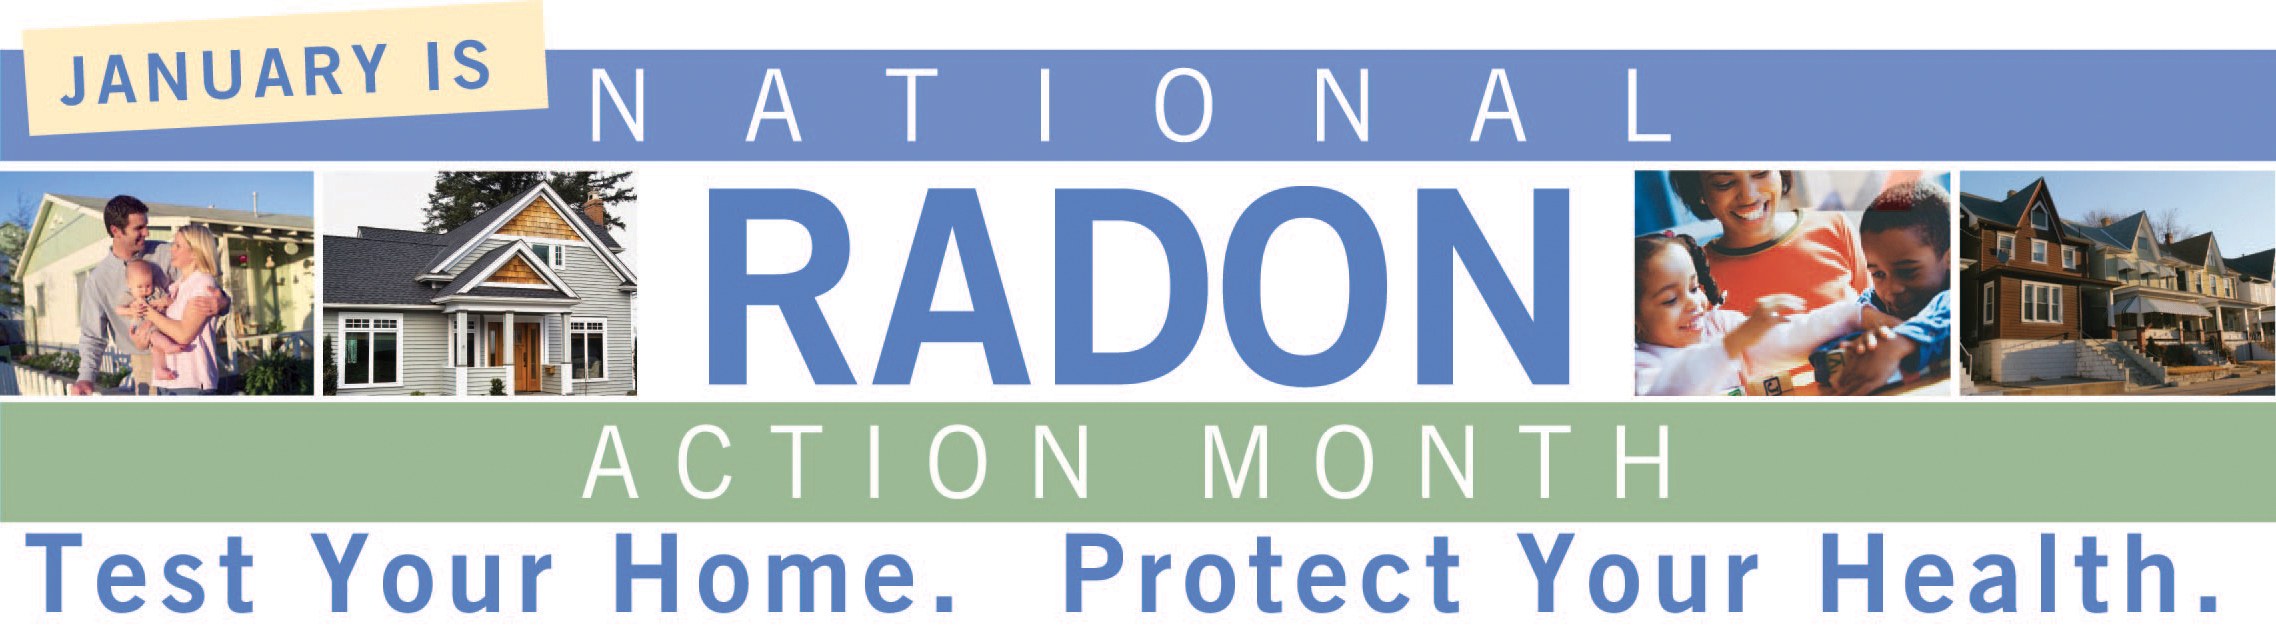 National Radon Action Month Banner